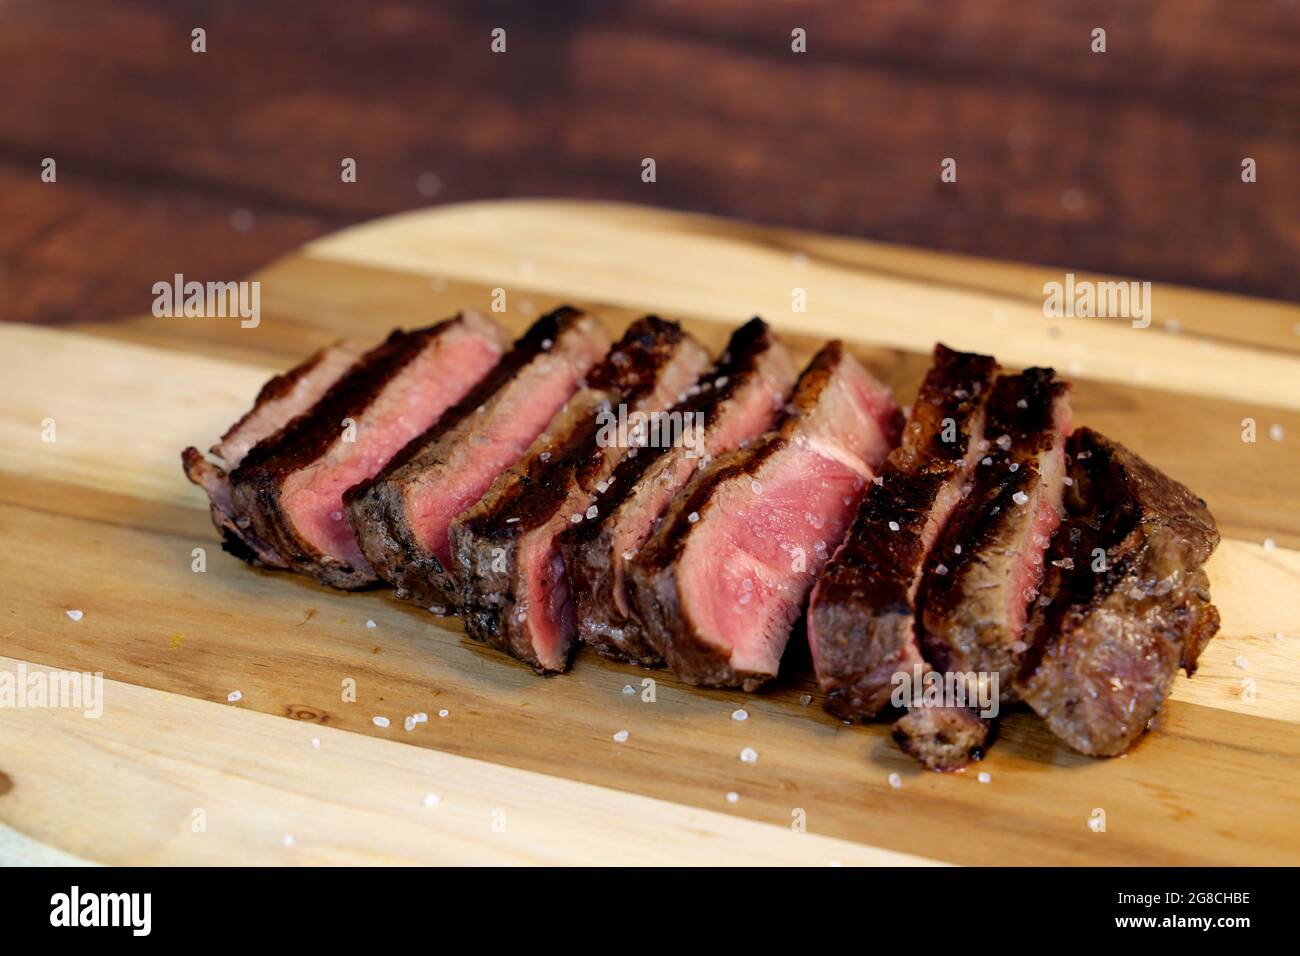 Short Rib or Costela Premium. Beautiful Steak sliced on a wooden board. Rare Steak sliced. Stock Photo